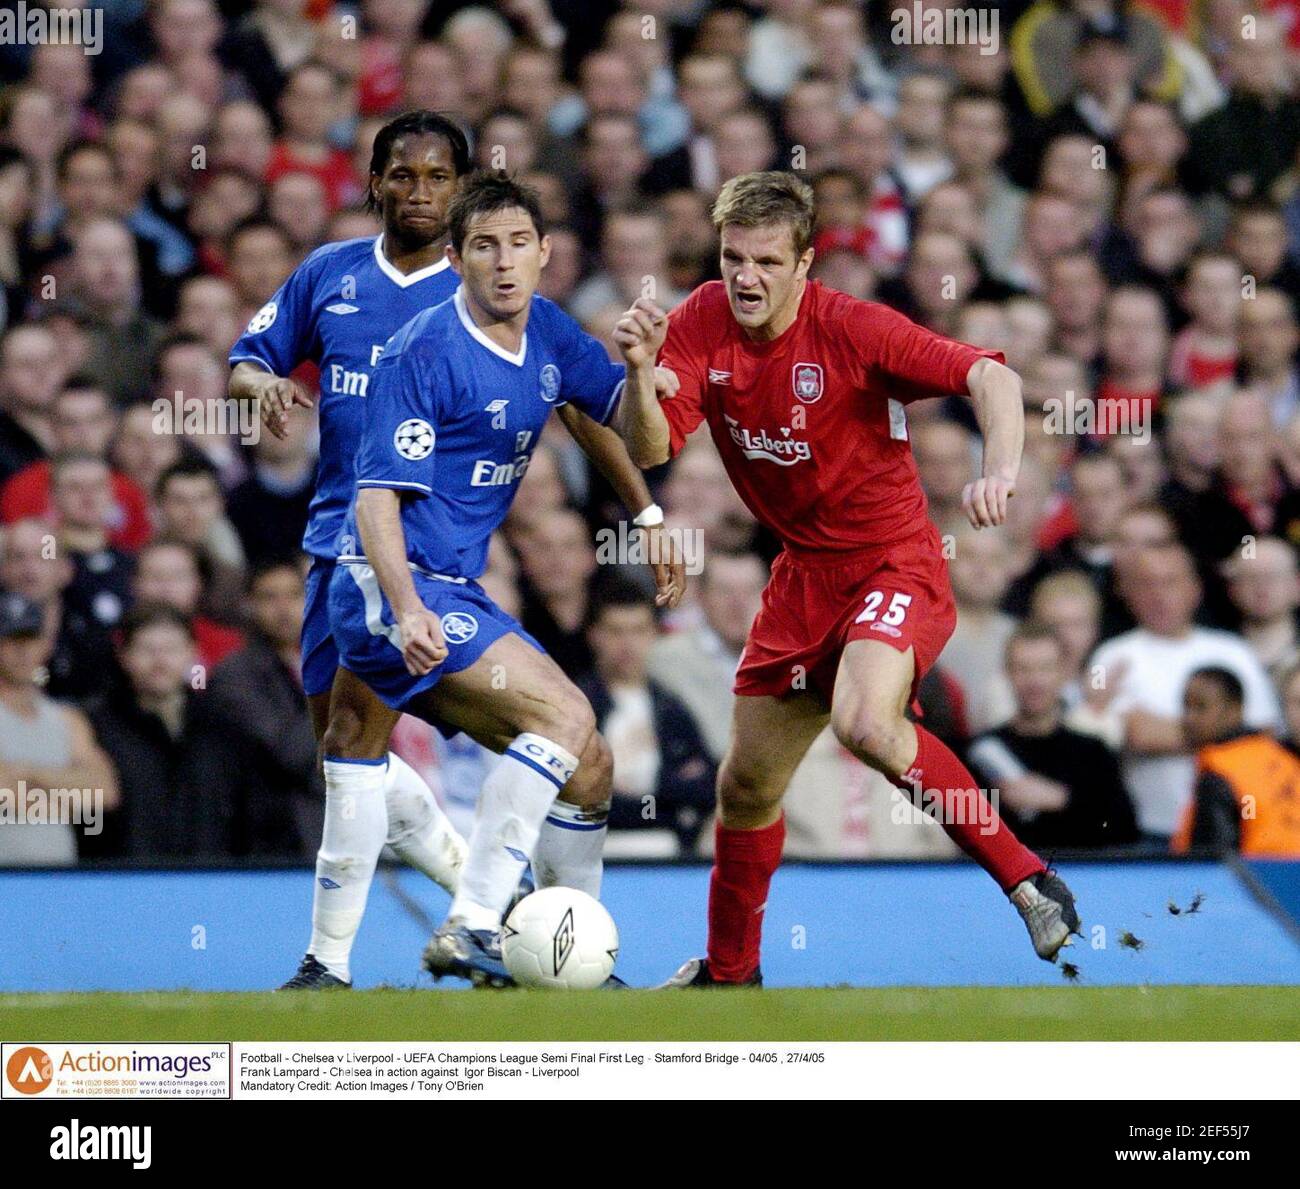 Football - Chelsea v Liverpool - UEFA Champions League Semi Final First Leg  - Stamford Bridge - 04/05 , 27/